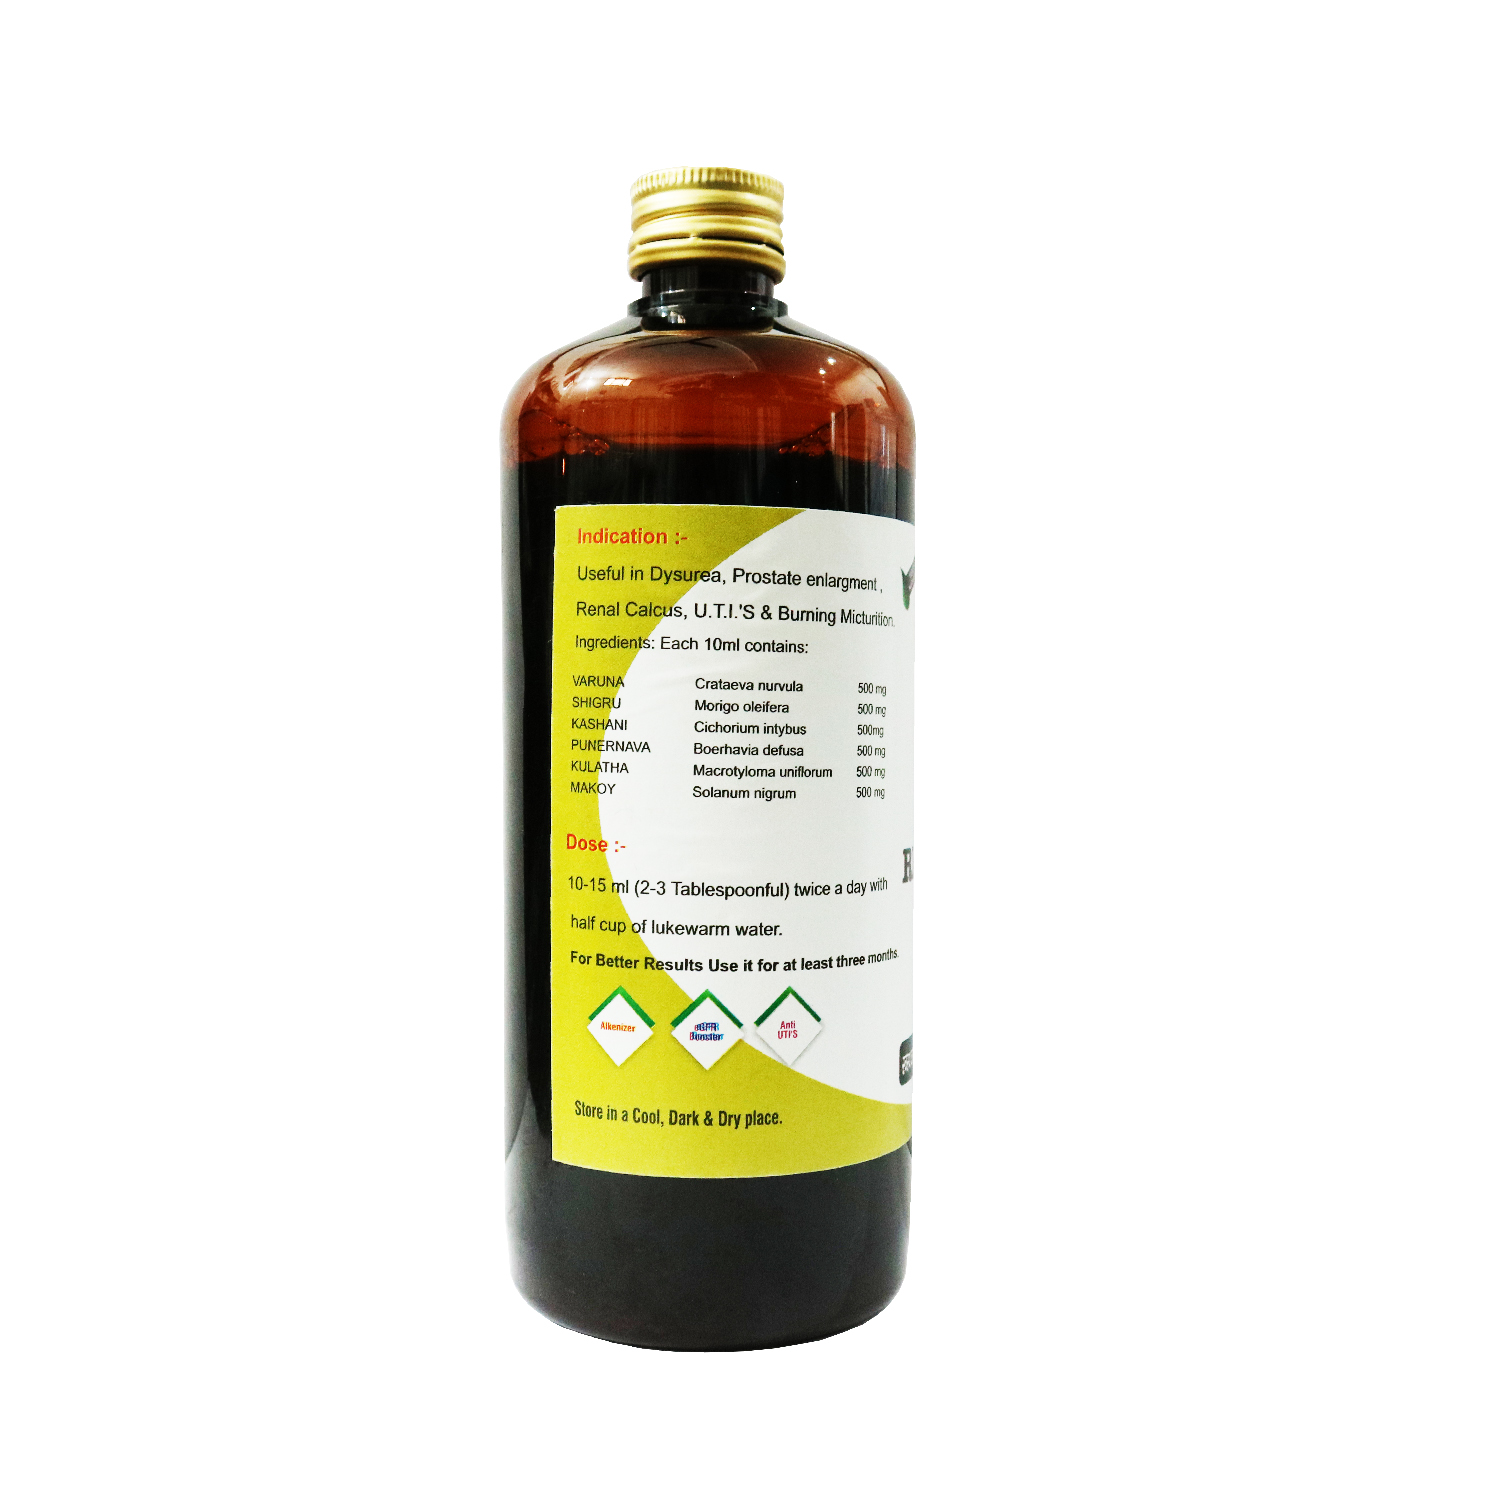 Buy Dr. Bhargav's Renospas Syrup -500 ml at Best Price Online